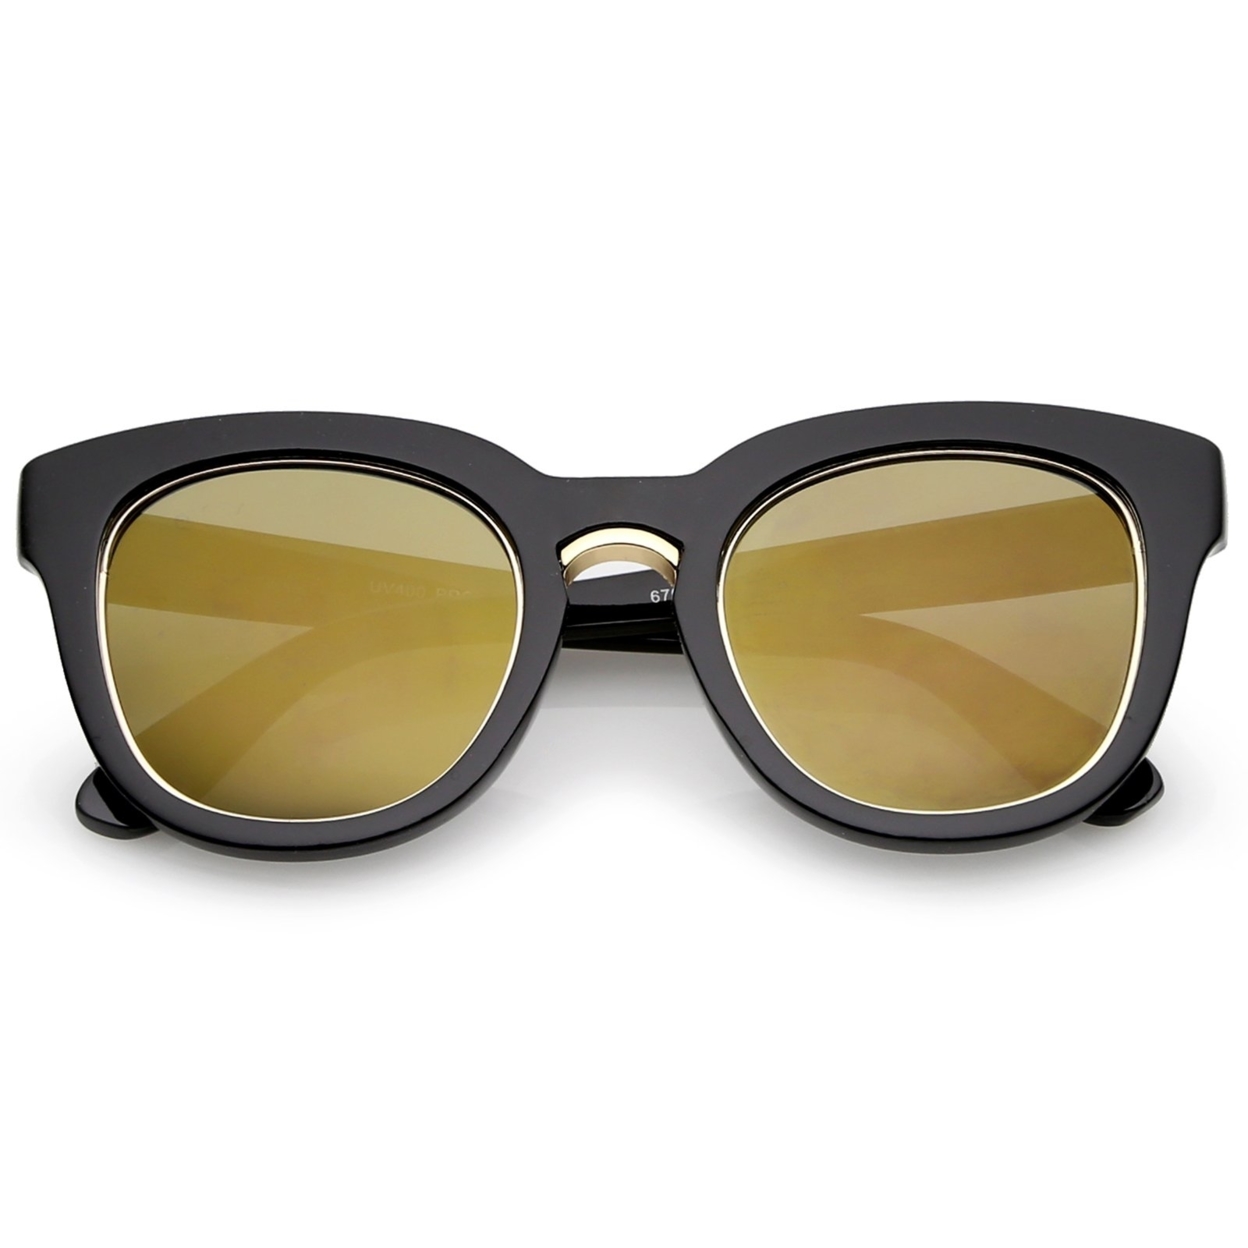 Women's Metal Bridge Trim Colored Mirror Flat Lens Cat Eye Sunglasses 50mm - Black-Gold / Blue Mirror